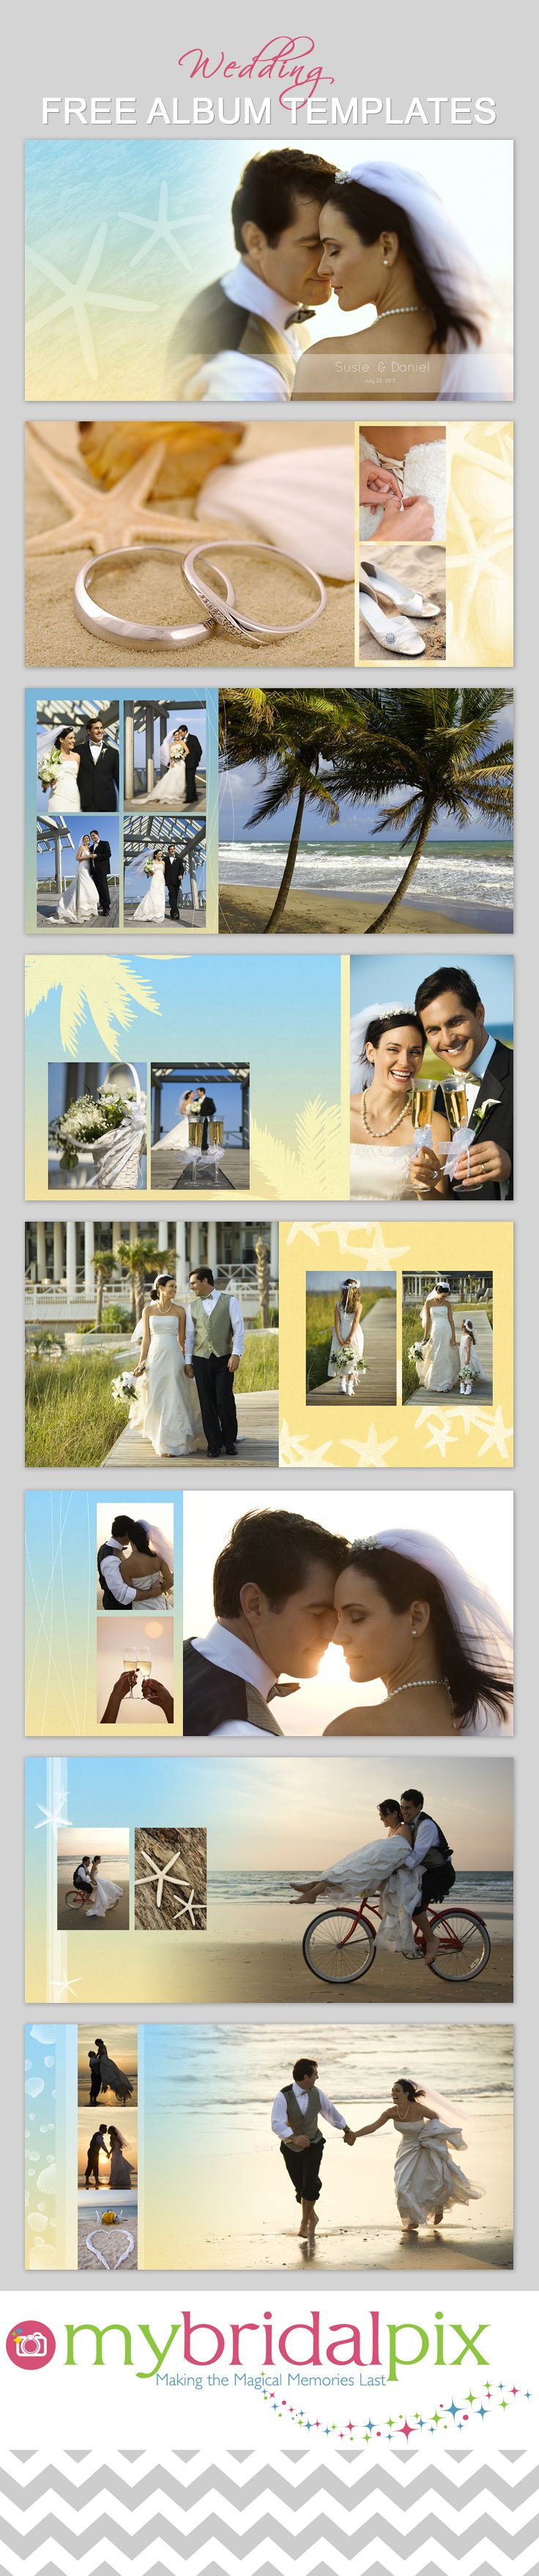 DIY Wedding Albums
 17 Best images about DIY Wedding Albums on Pinterest